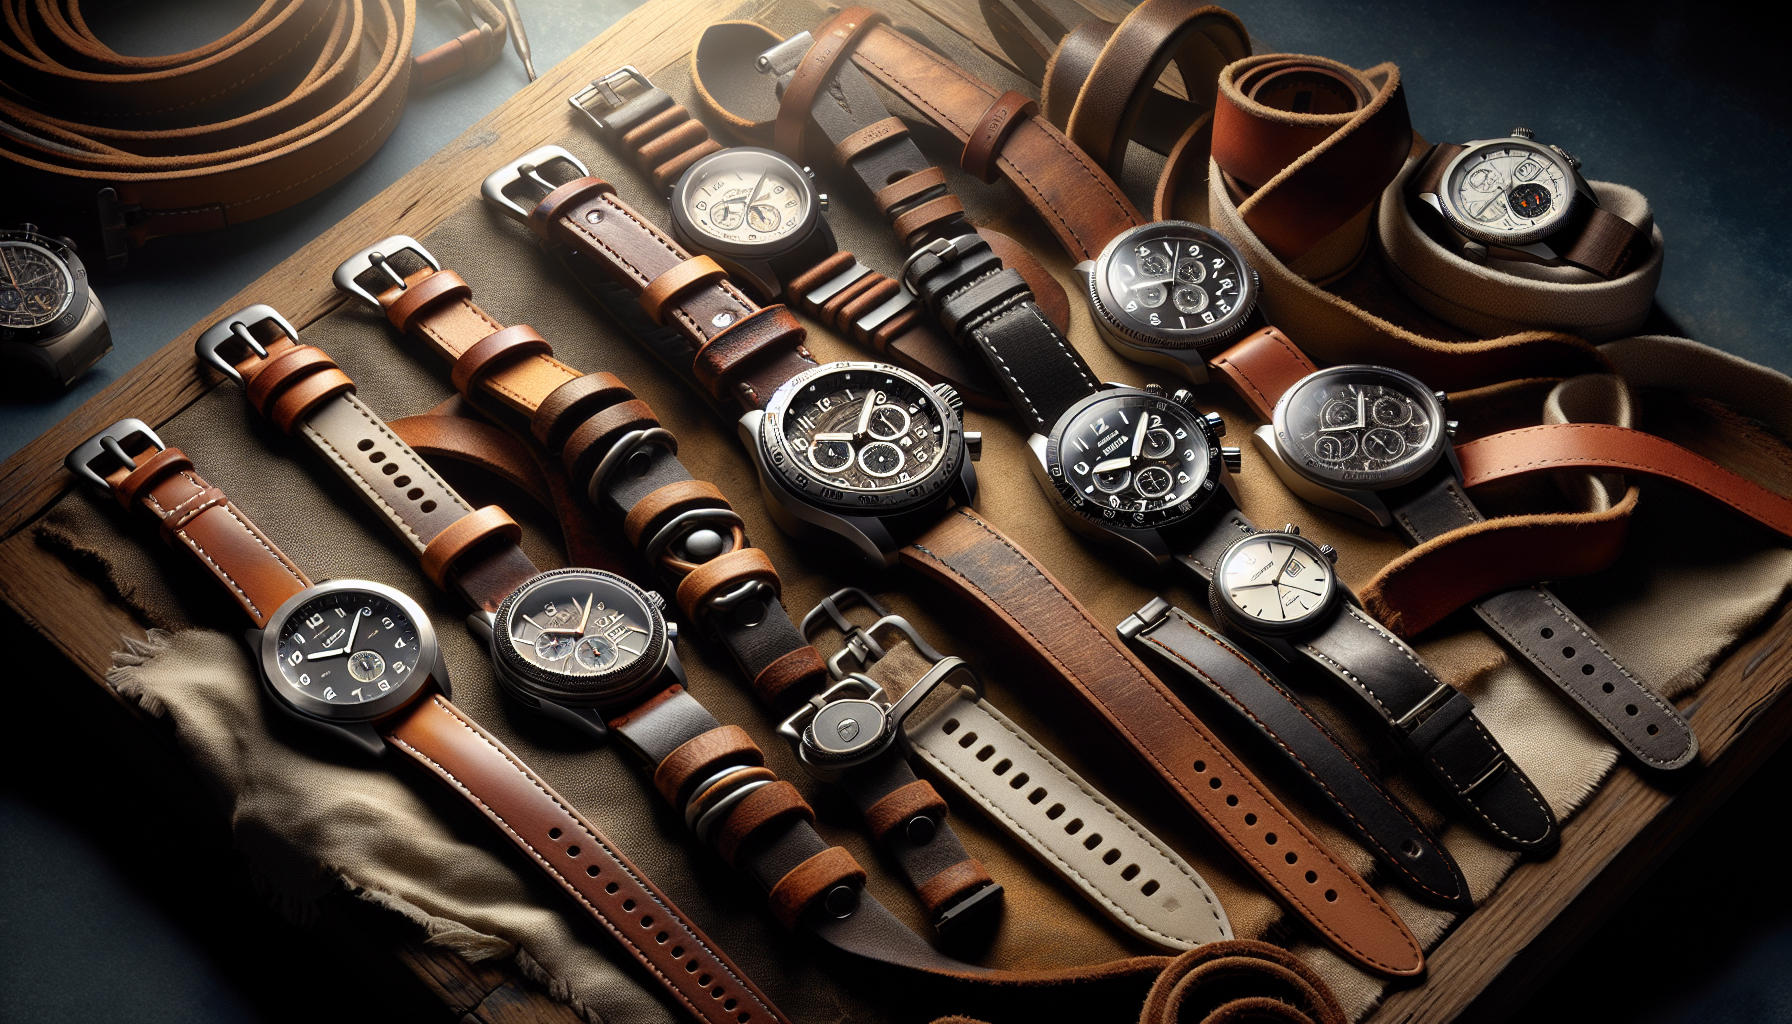 Artistic depiction of popular watch models with bund straps